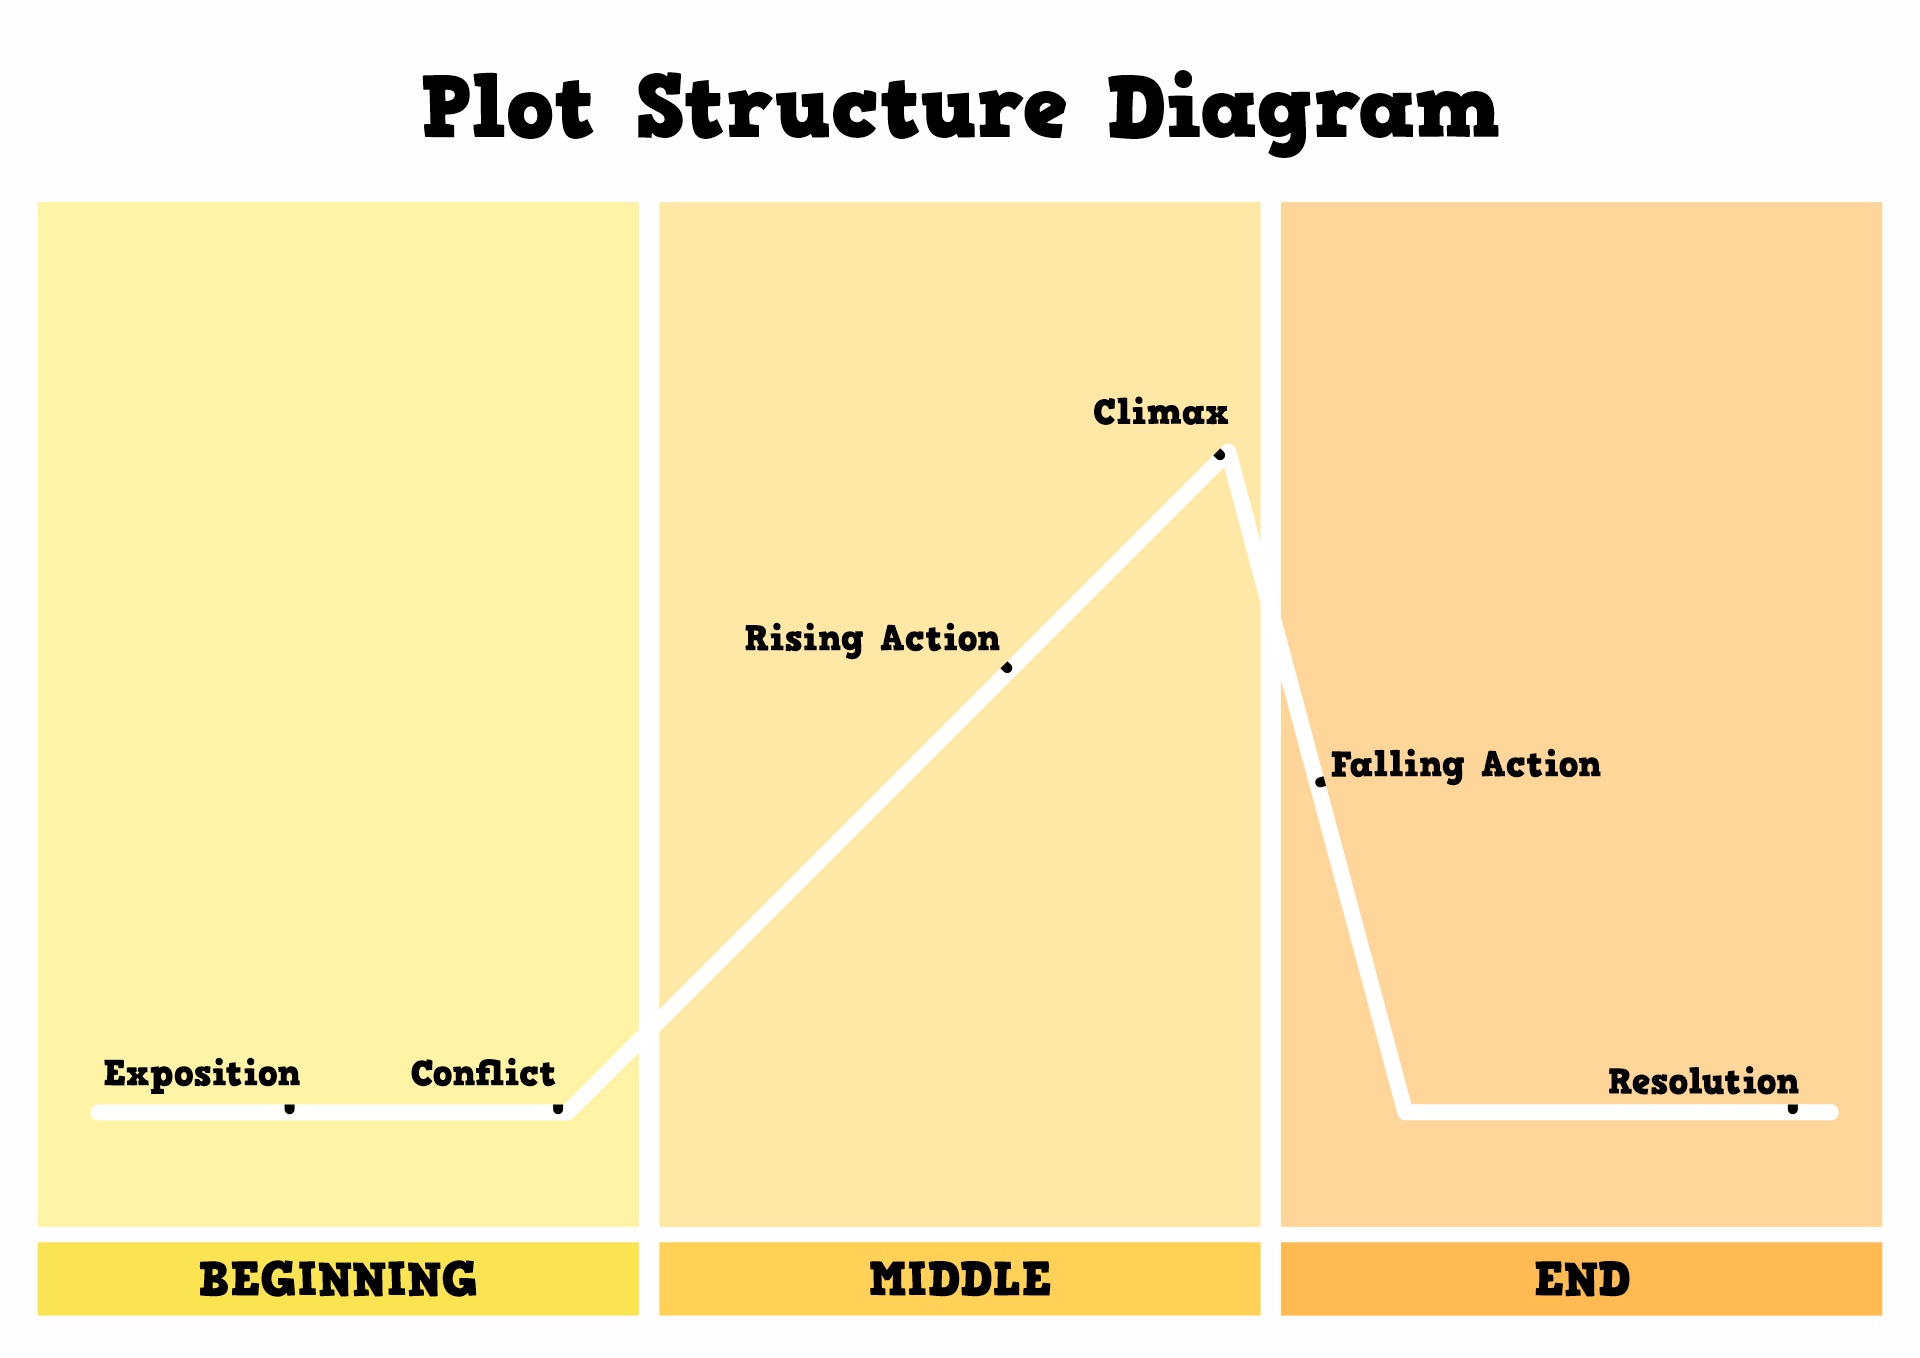 Story Plot Structure Diagram Image